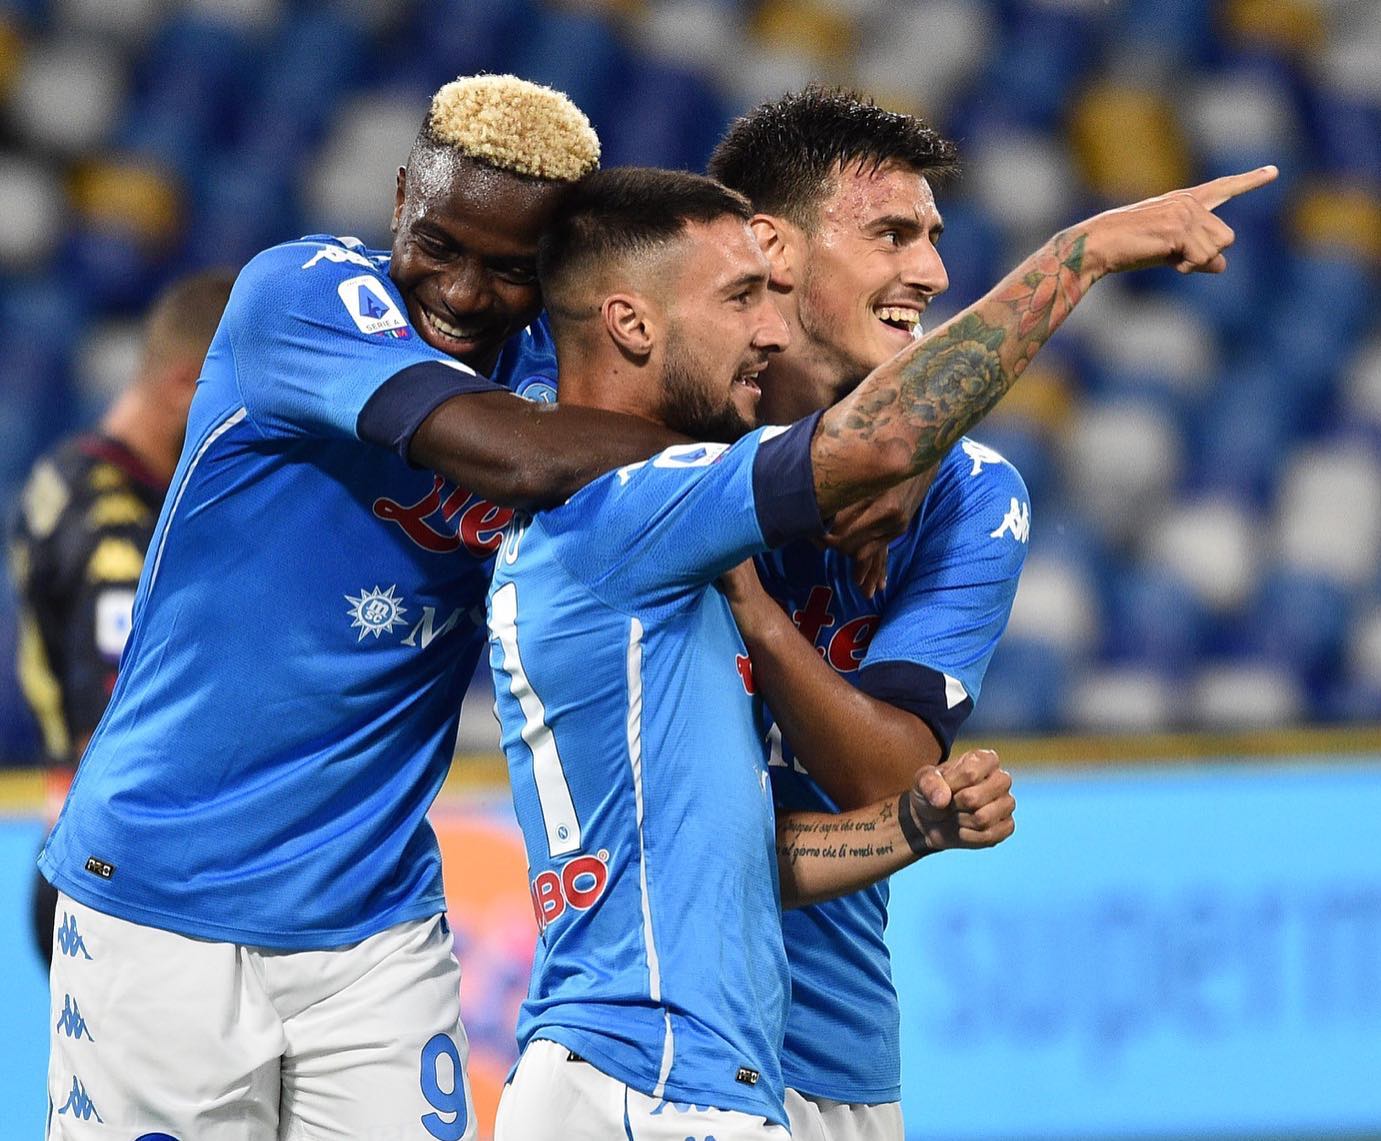 Finisce 6-0 al San Paolo tra Napoli e Genoa